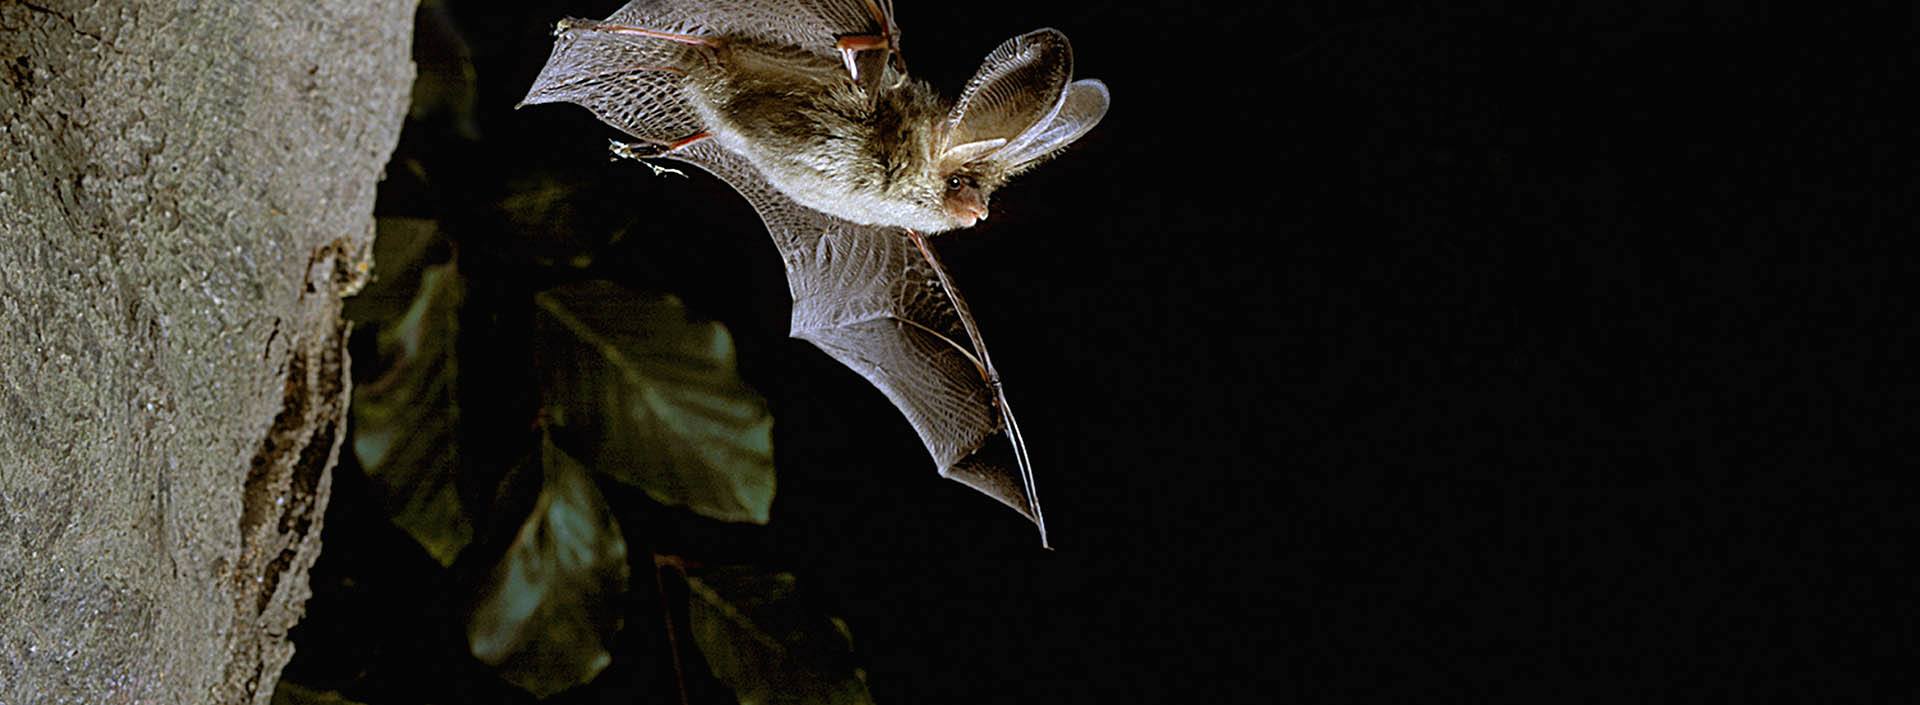 Slide 5 - Bat in flight - National bat monitoring programme recording website and database